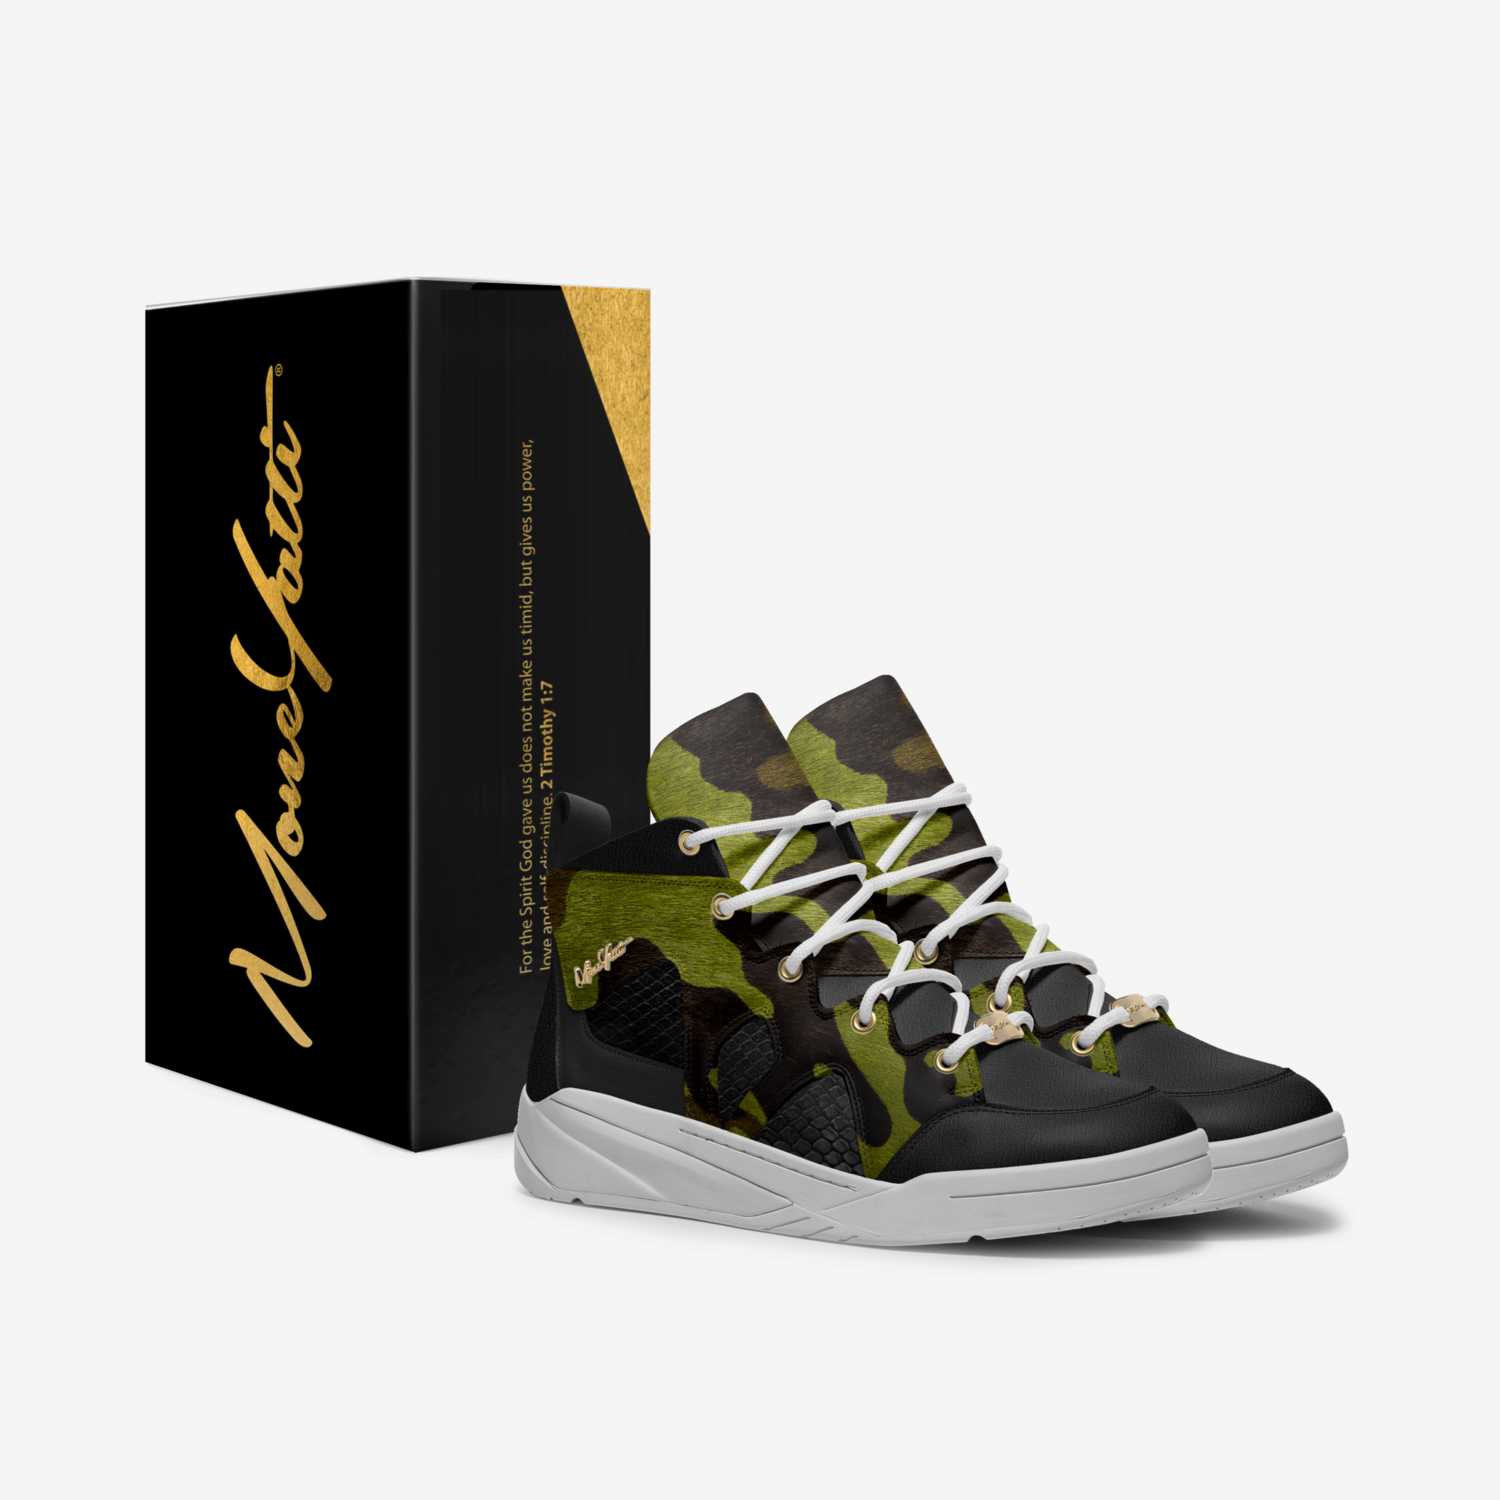 MONEYATTI TAKEOFF 009 custom made in Italy shoes by Moneyatti Brand | Box view